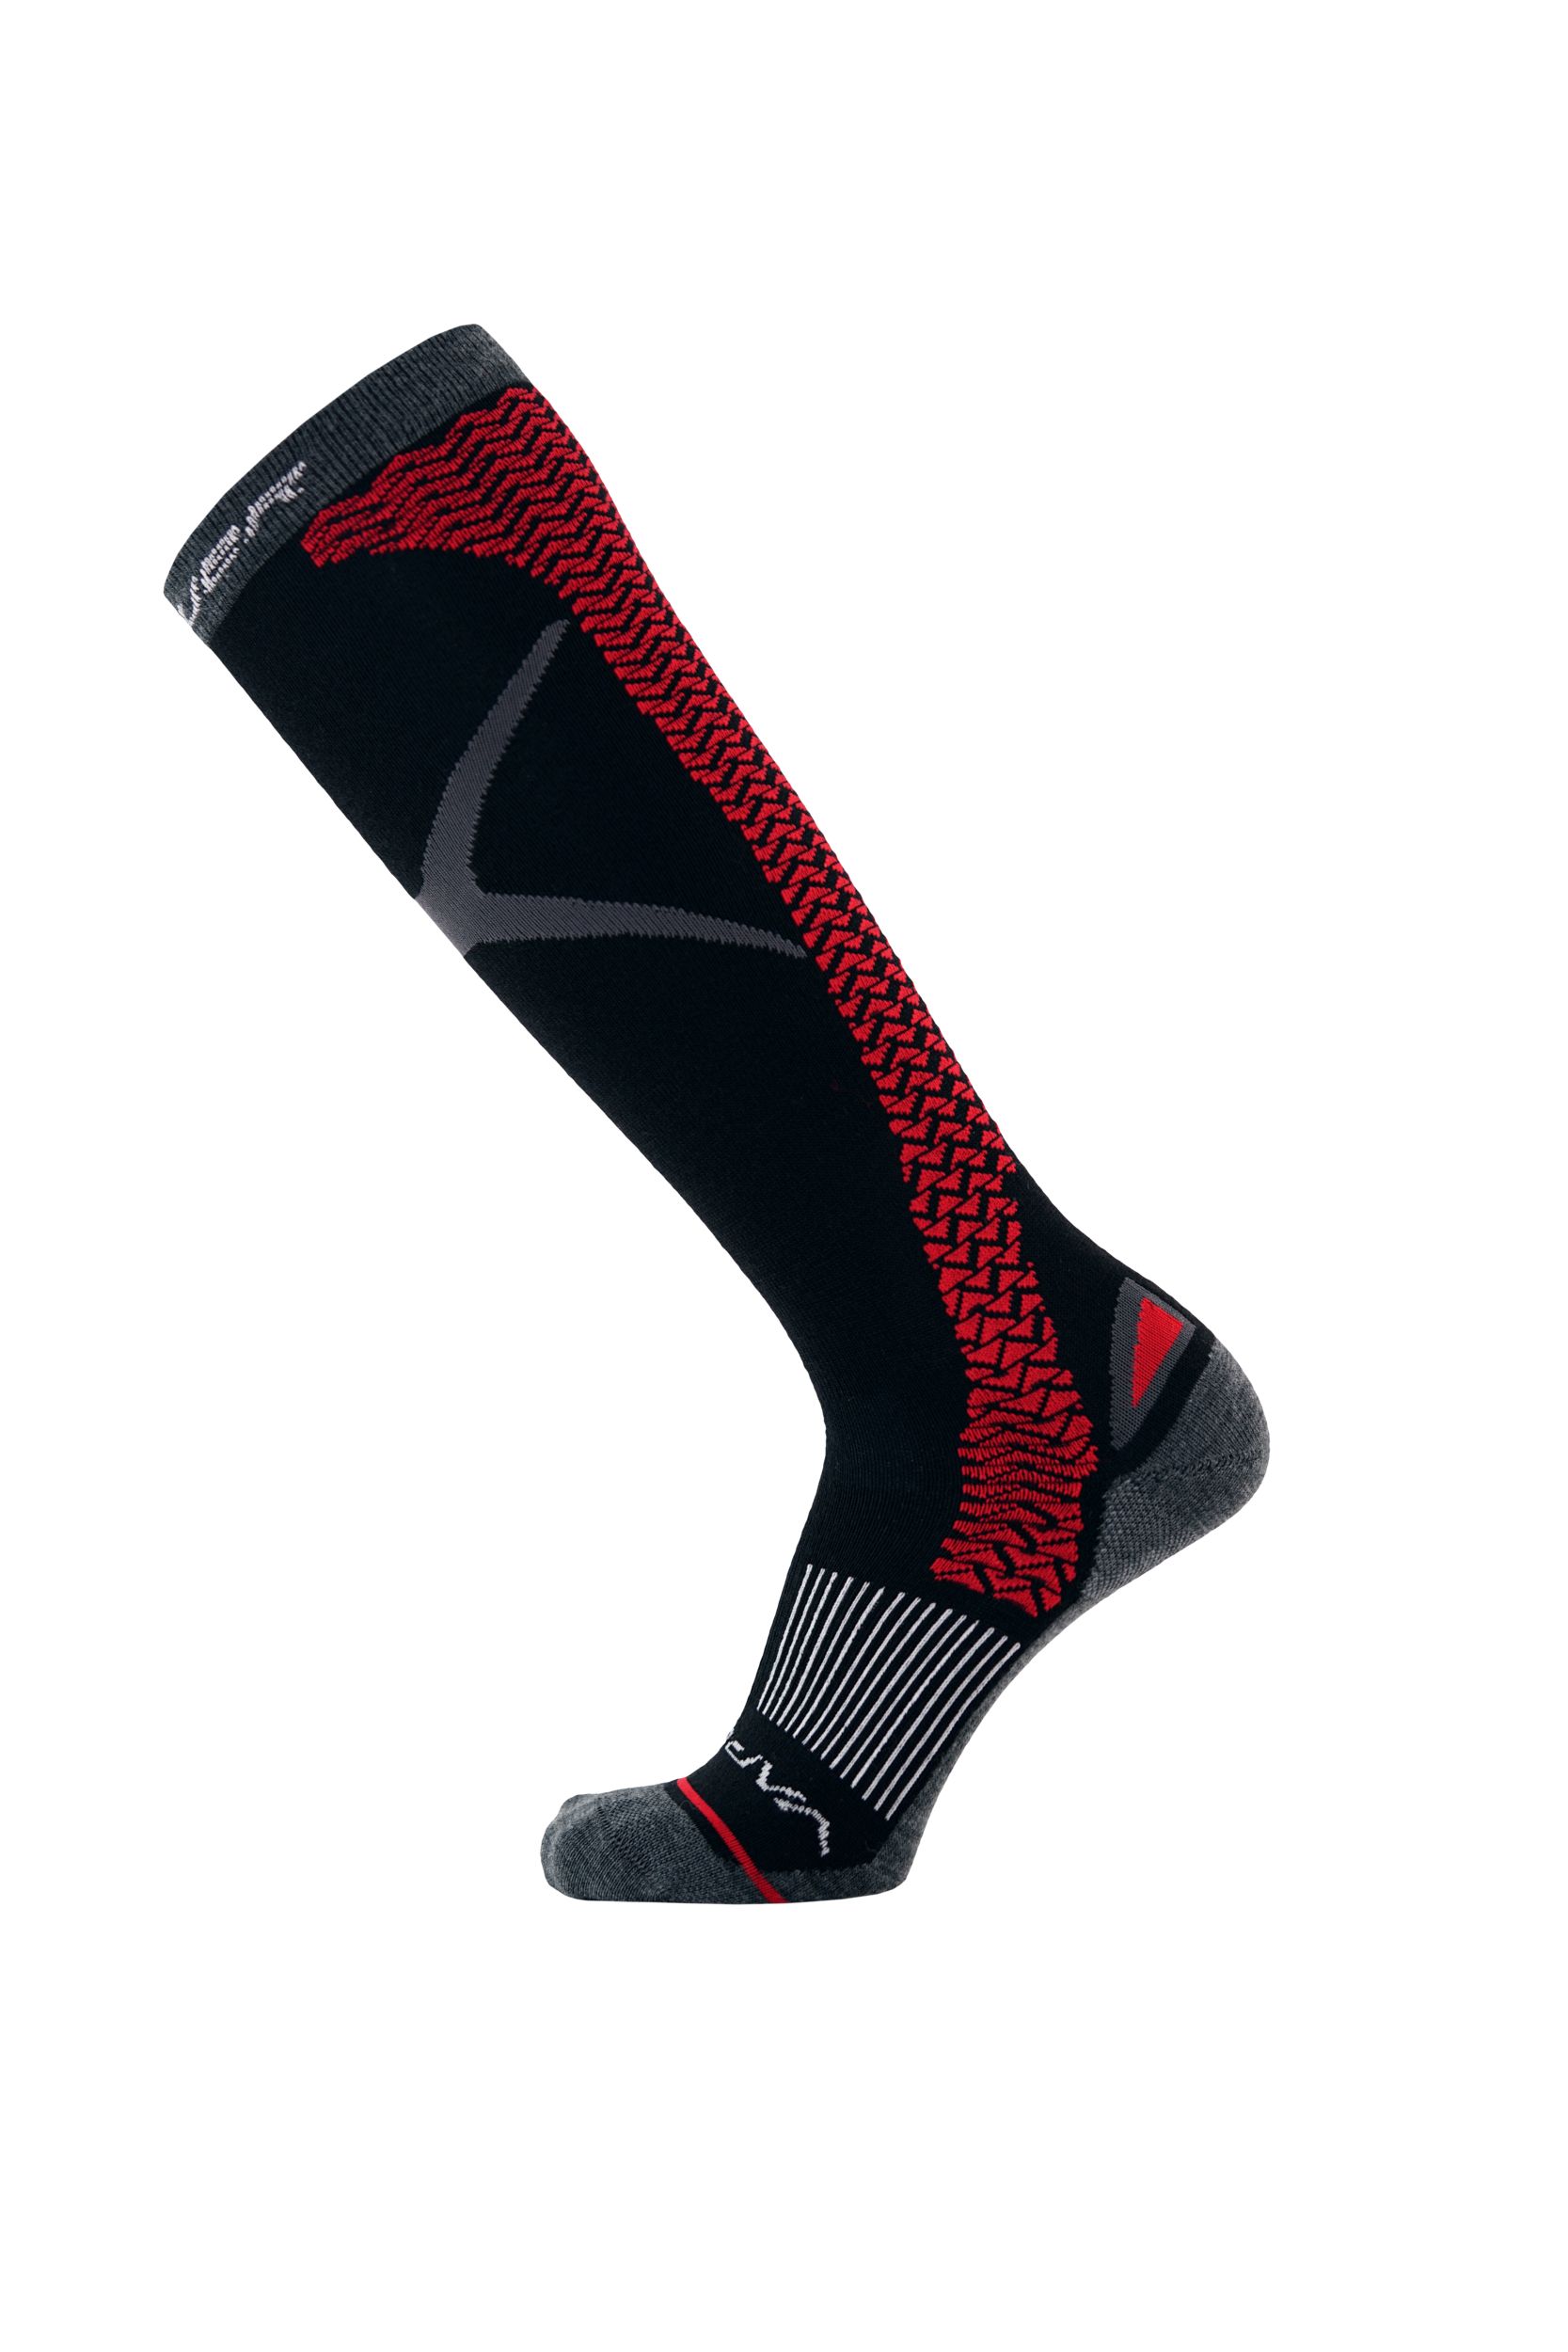 Image of Bauer Pro Vapor Tall Socks